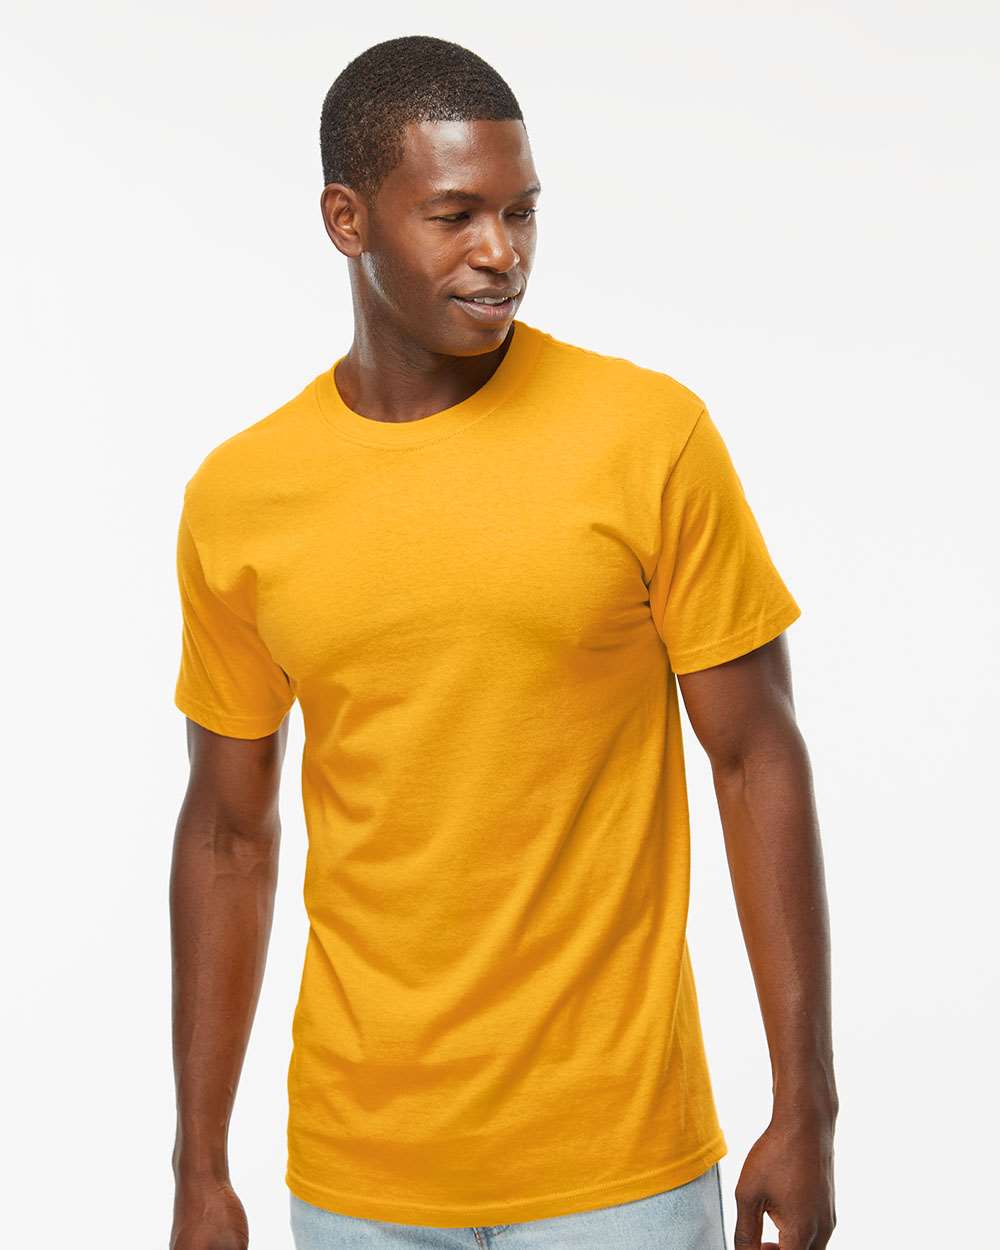 M&O® Gold Soft Touch T-Shirt